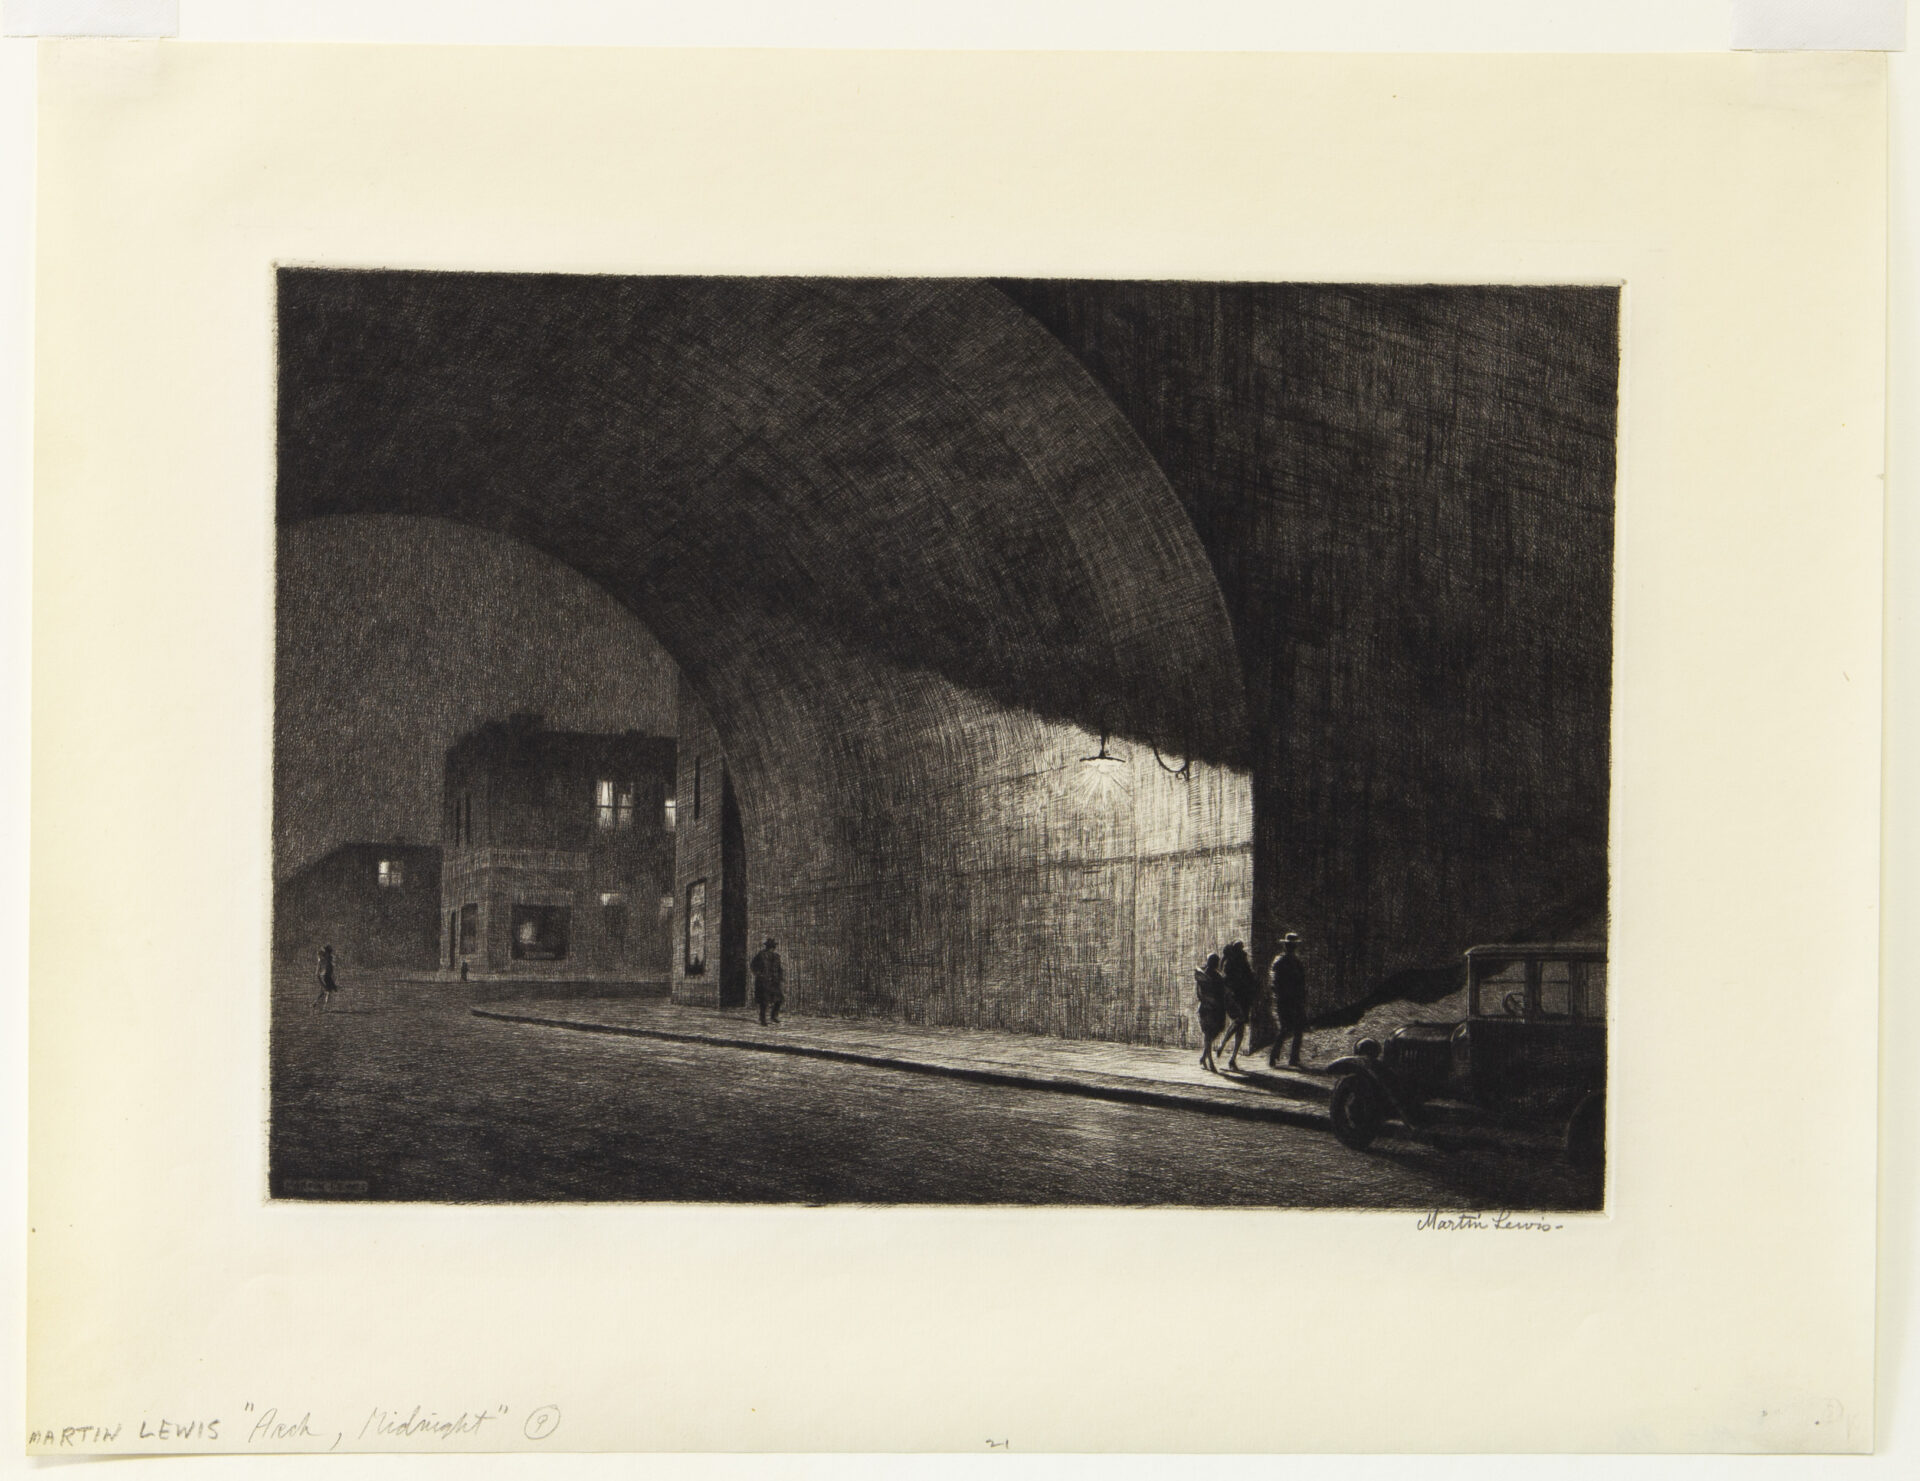 Martin Lewis Arch, Midnight, 1930 Drypoint Image Dimensions: 8 1/8 x 11 5/8 inches (20.6 x 29.5 cm) Paper Dimensions: 12 1/8 x 16 inches (30.8 x 40.6 cm) Framed Dimensions: 16 1/2 x 20 1/4 inches (41.9 x 51.4 cm) Edition of 99